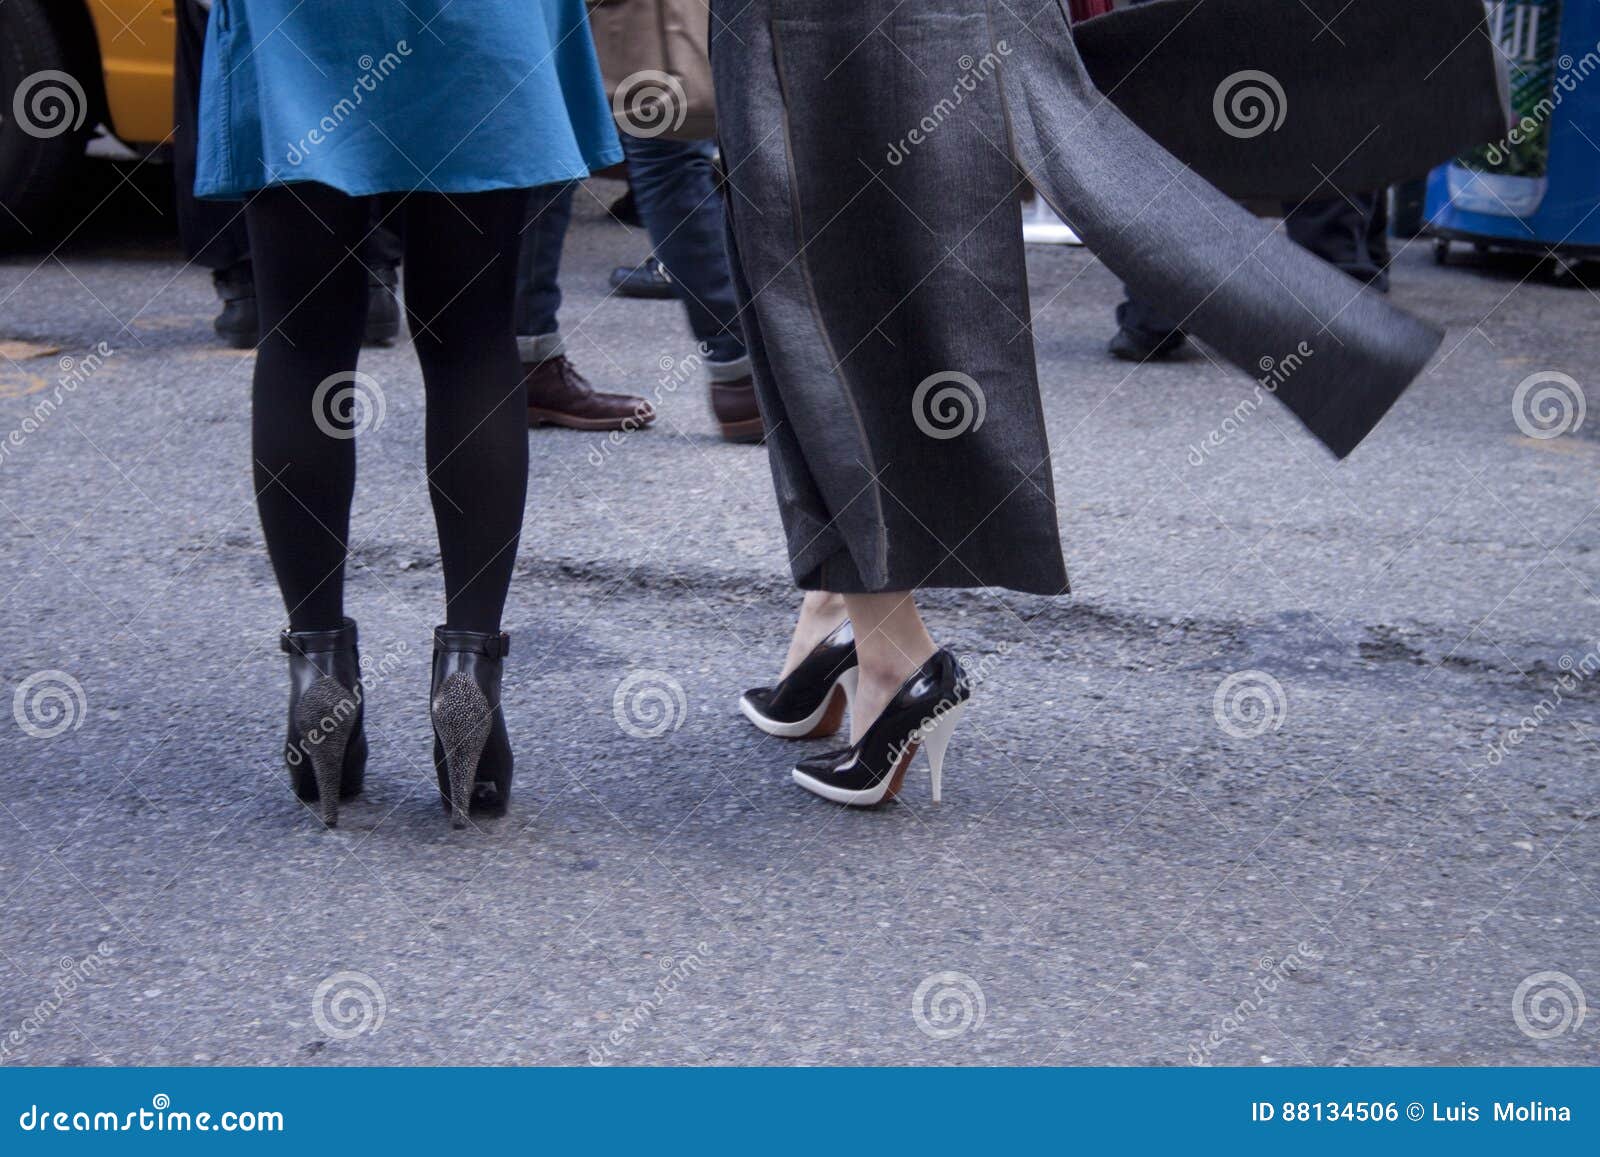 detail of womens high heels in new york